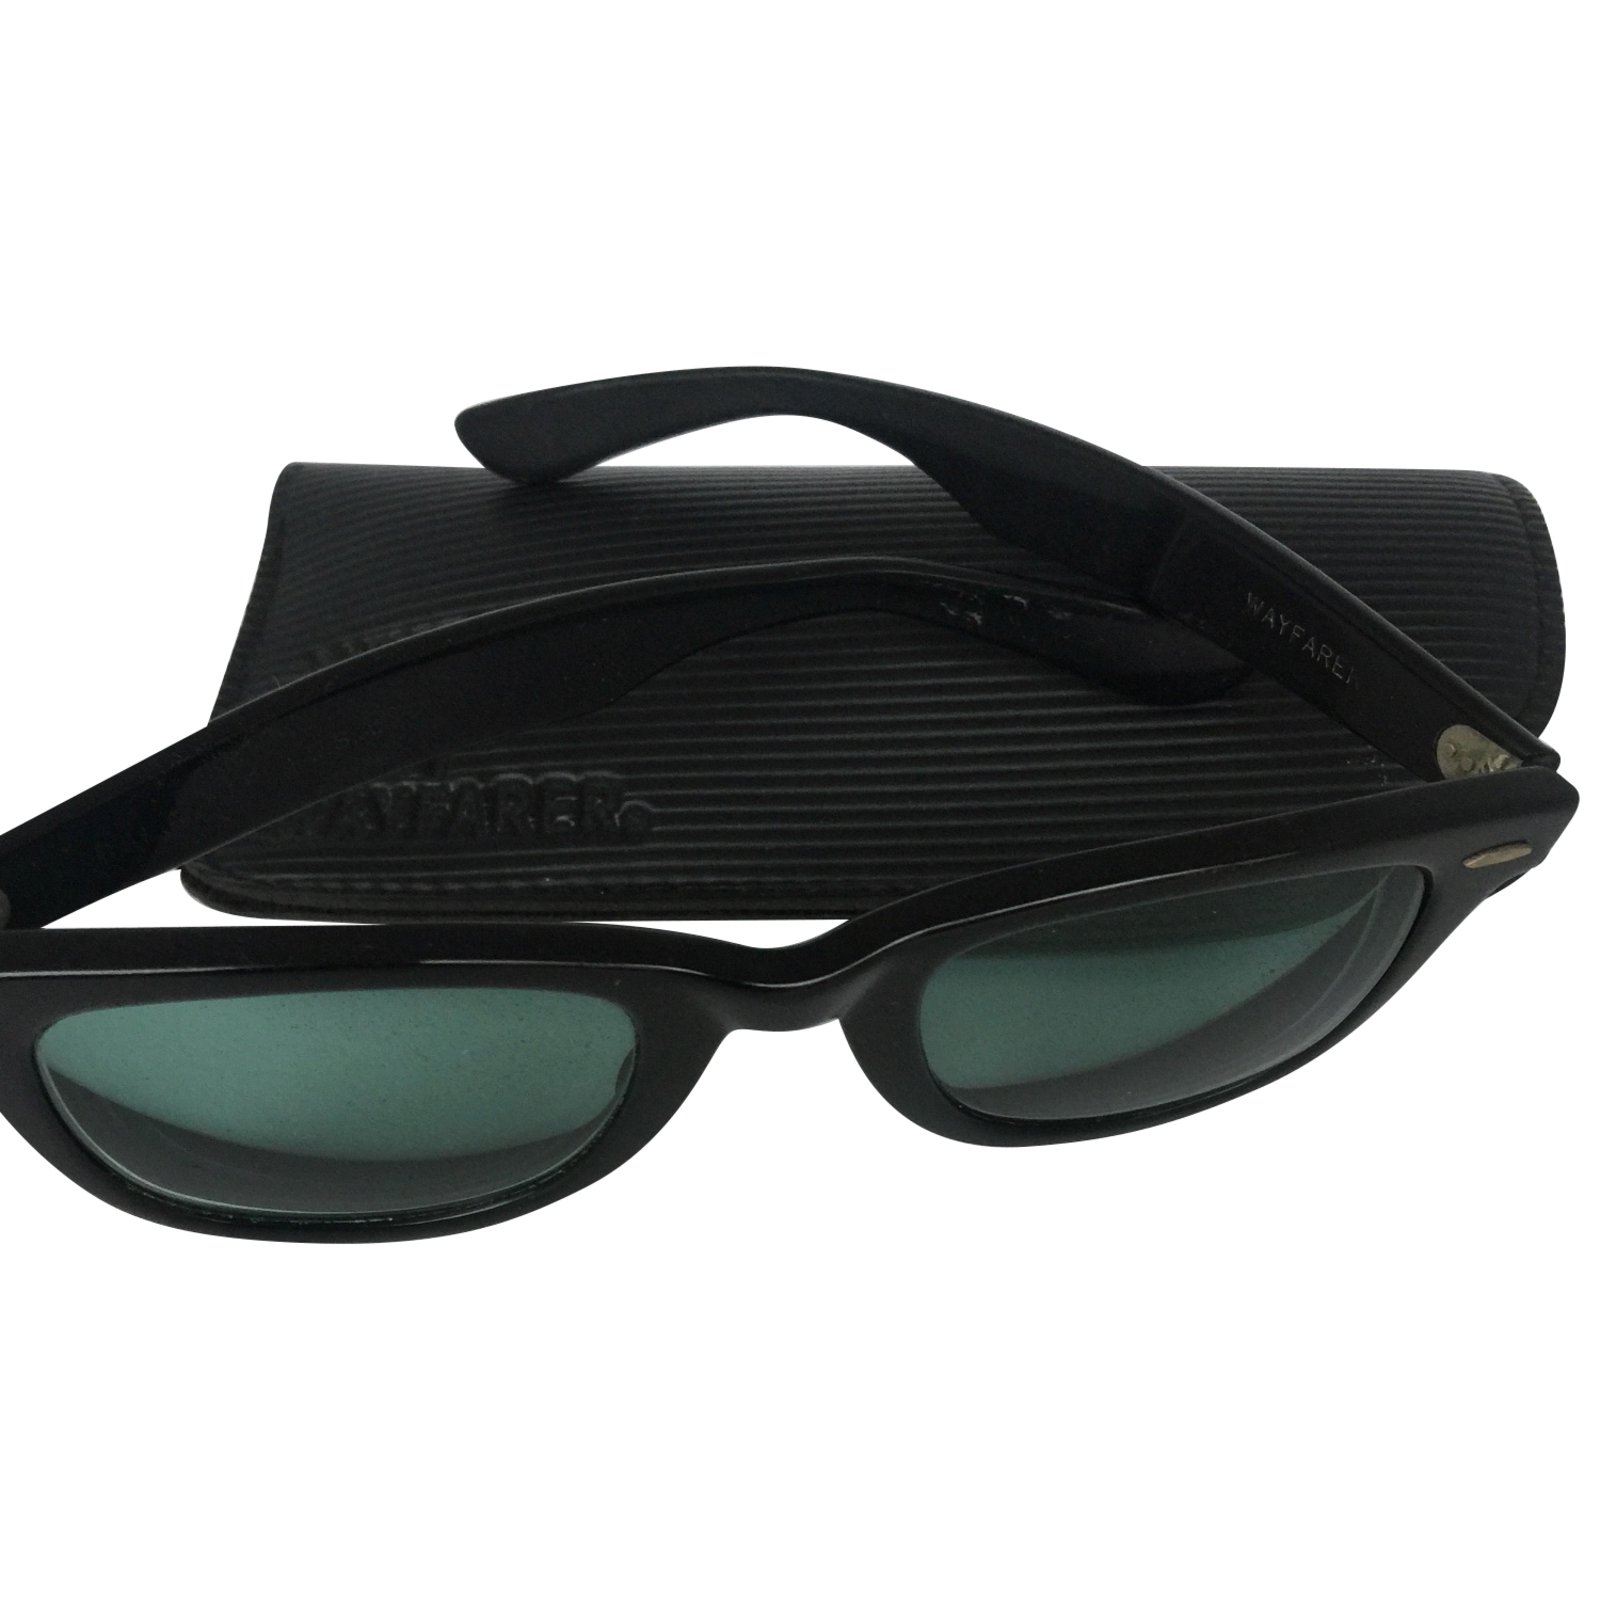 plastic wayfarer sunglasses